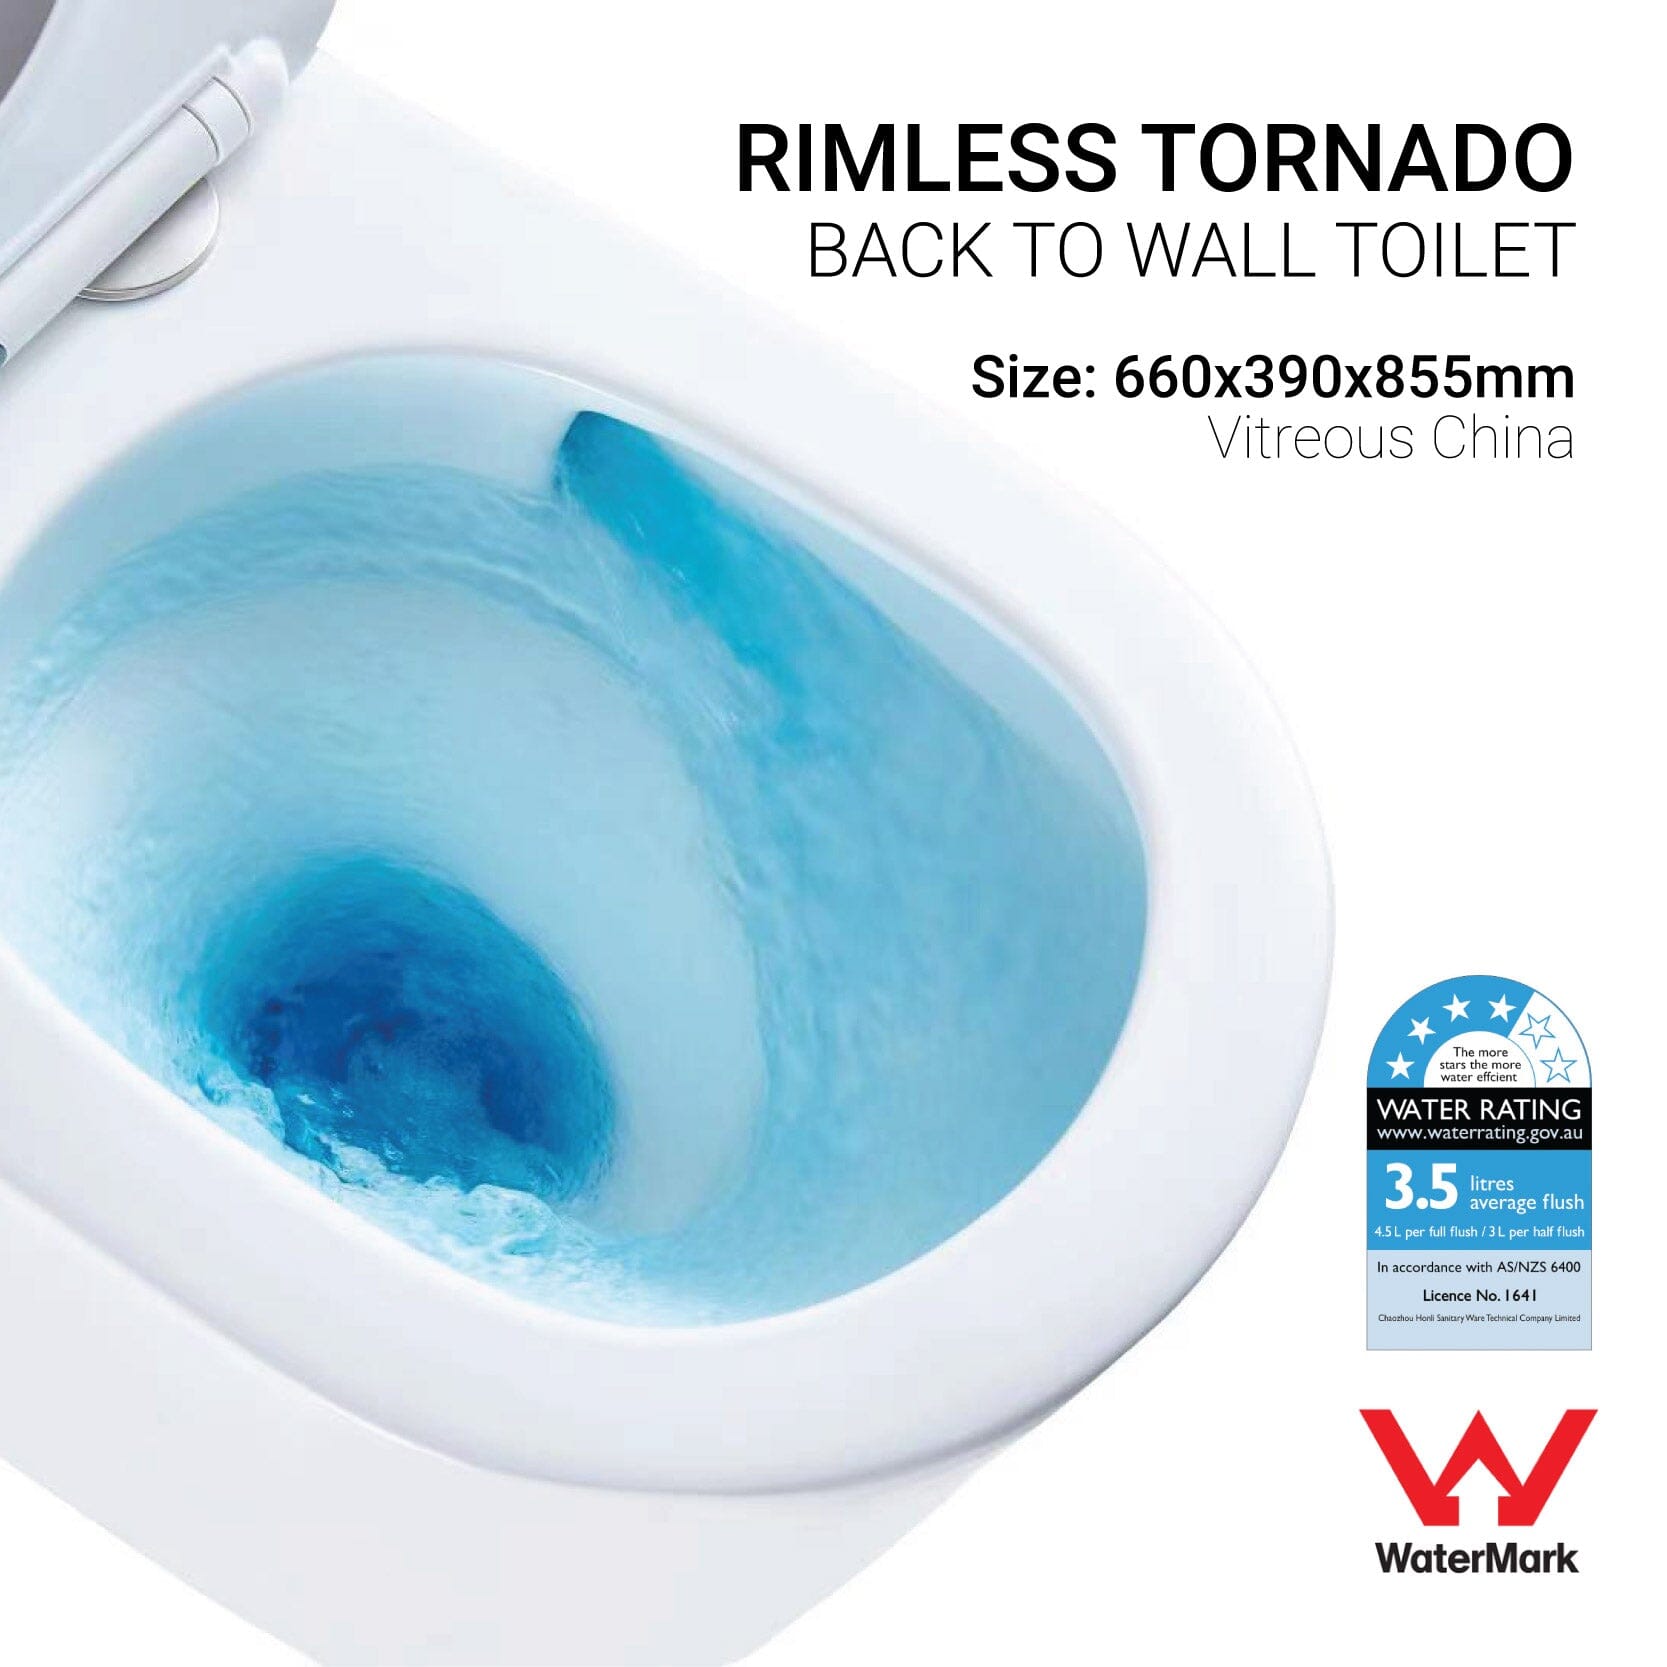 Max66 Rimless Tornado Back To Wall Toilet Toilets Arova 